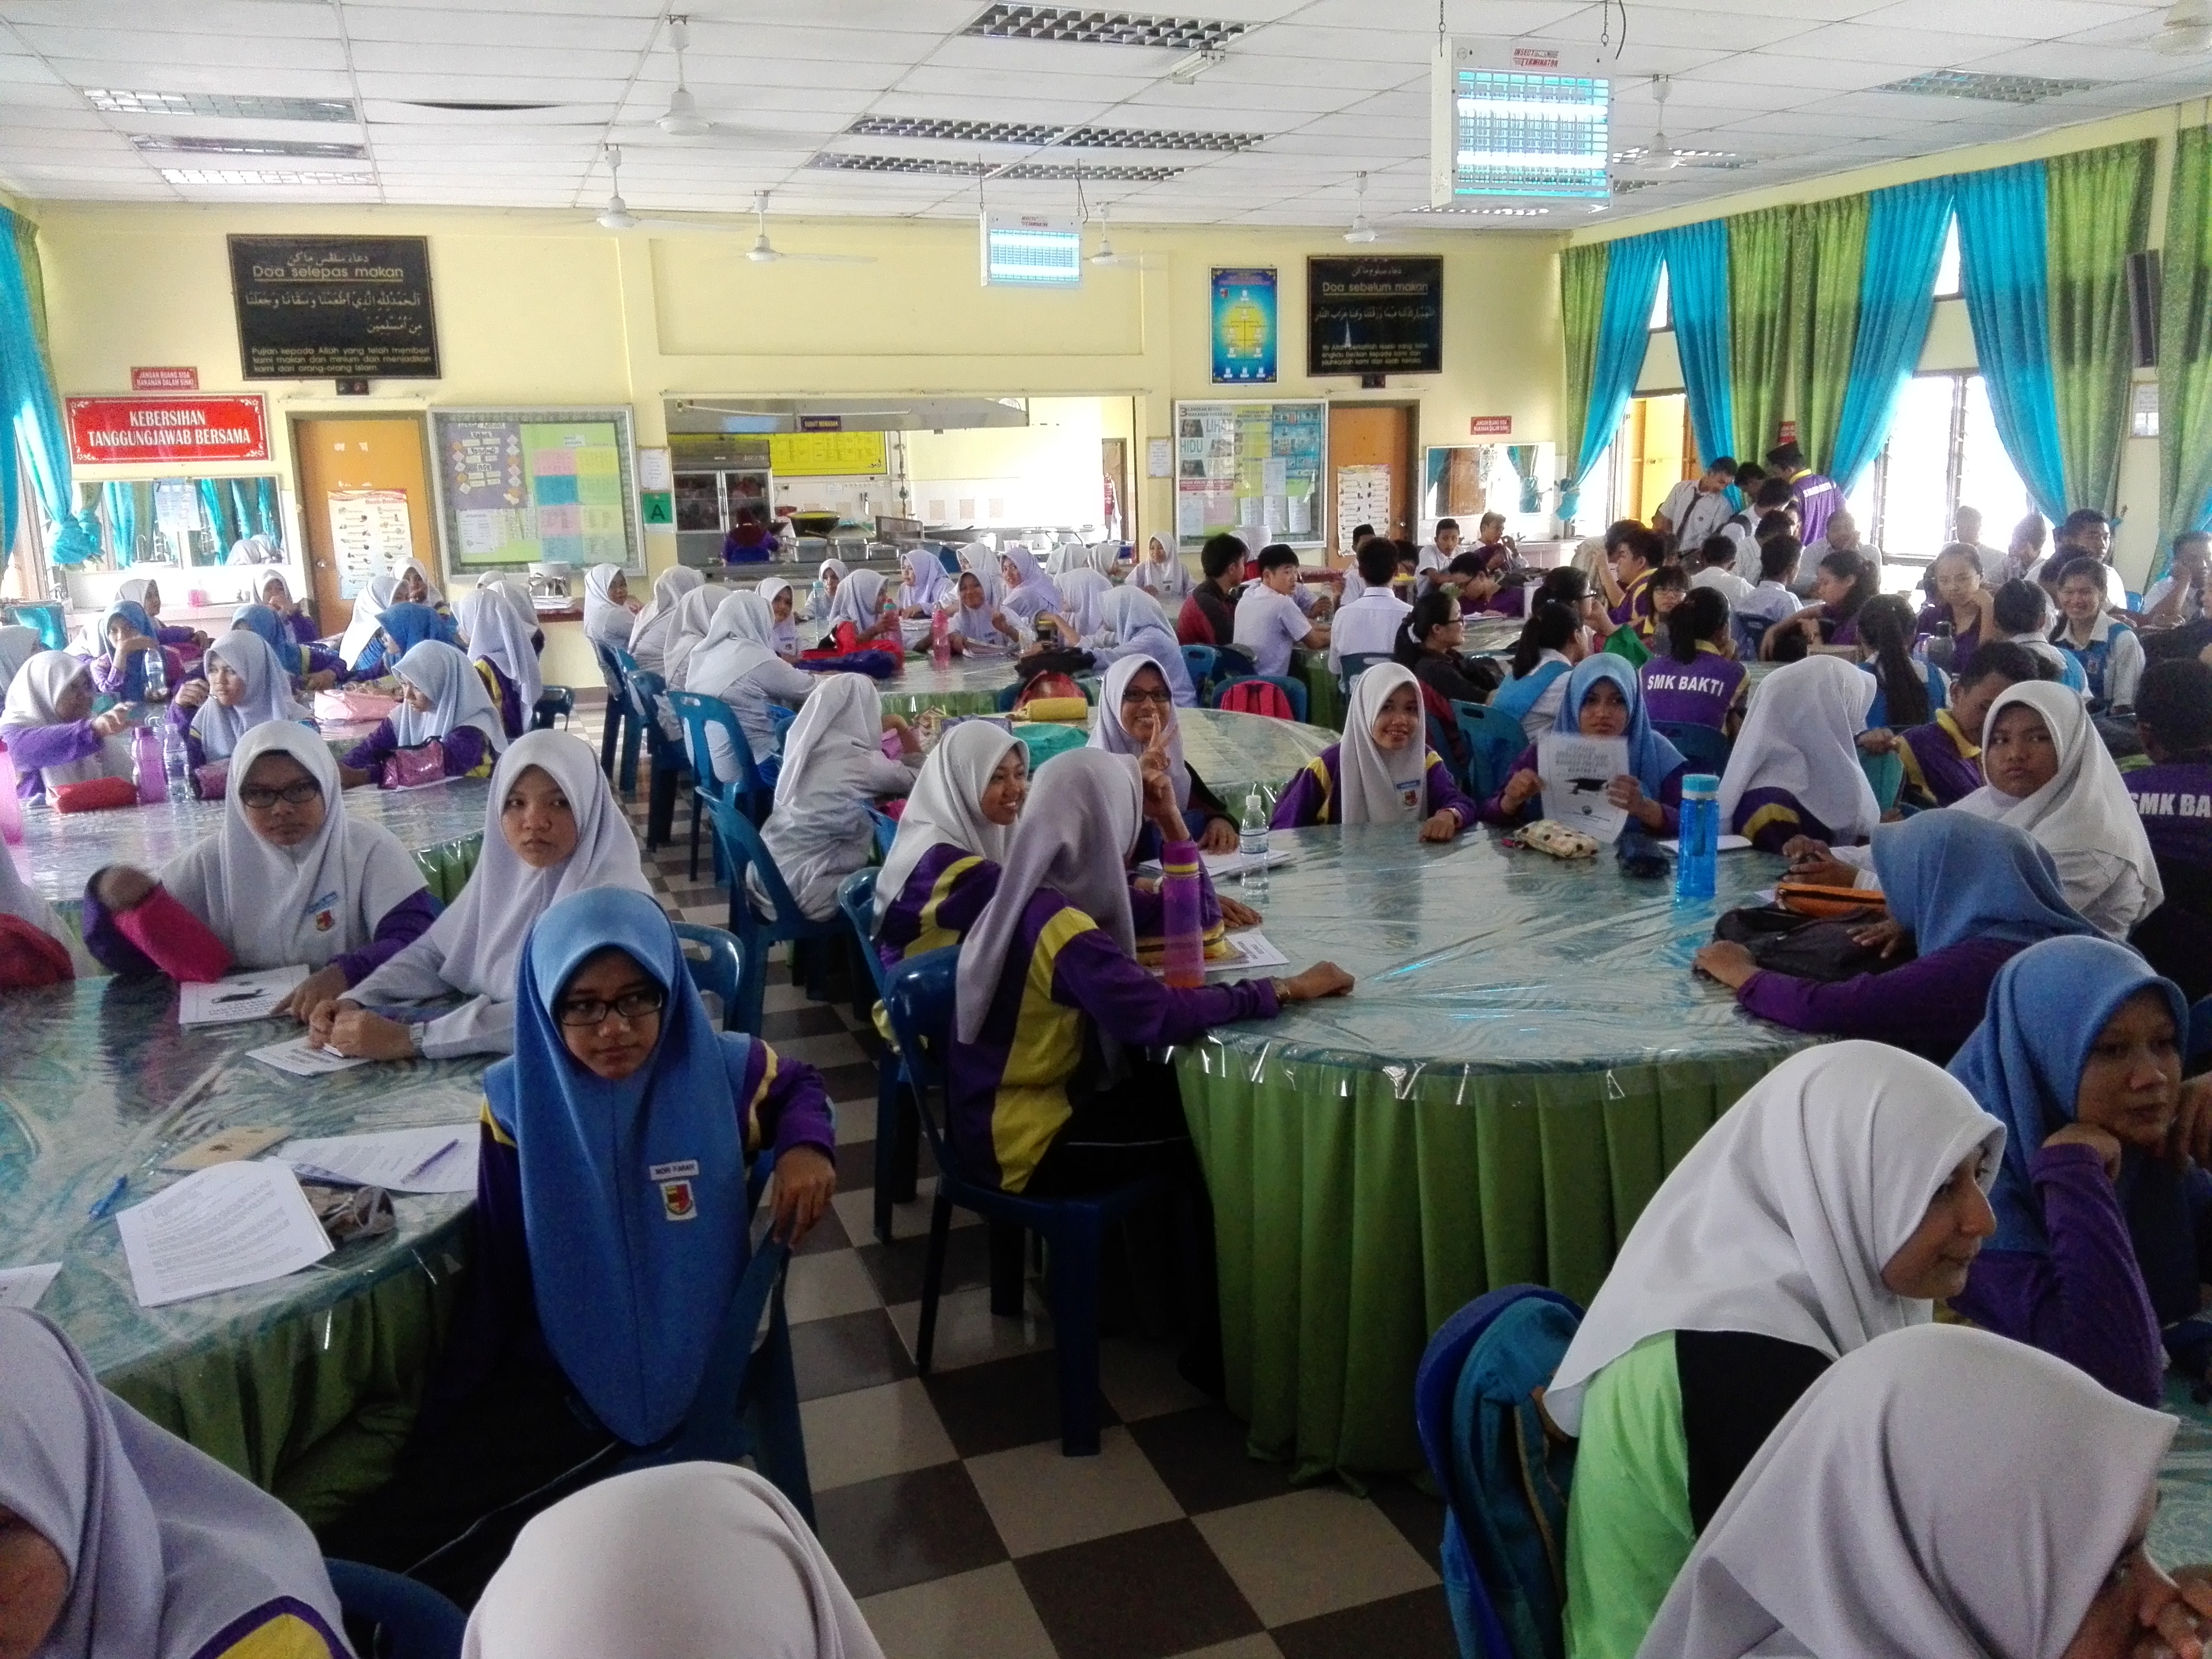 Lamanbahasa's Blog  Guru Cemerlang Bahasa Melayu, SMK 